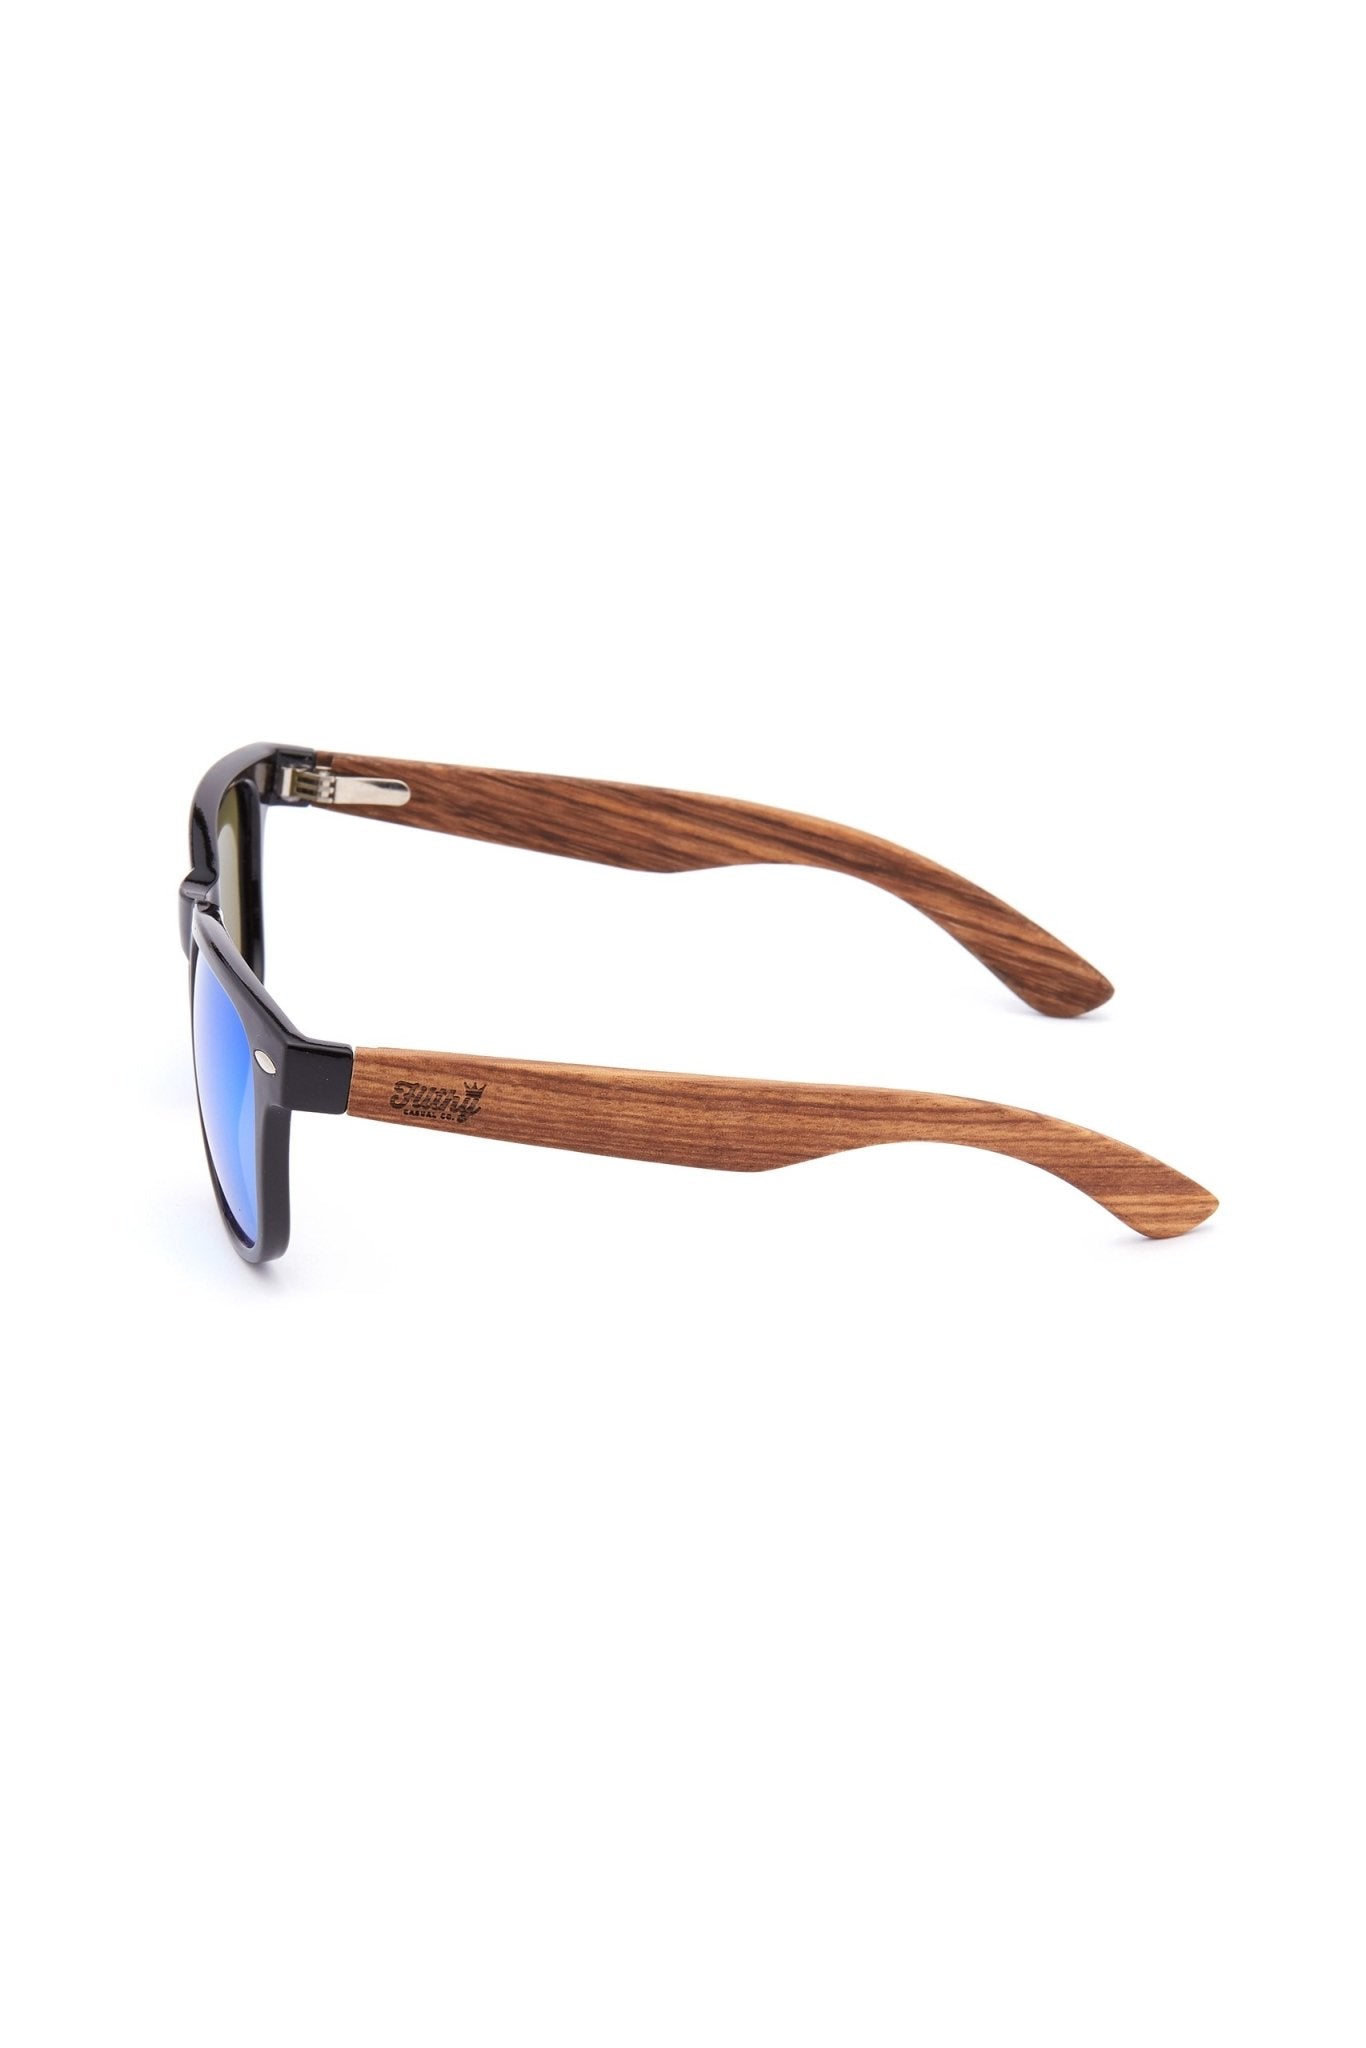 Bliz Active Eyewear - Hero Sunglasses grey at Sport Bittl Shop